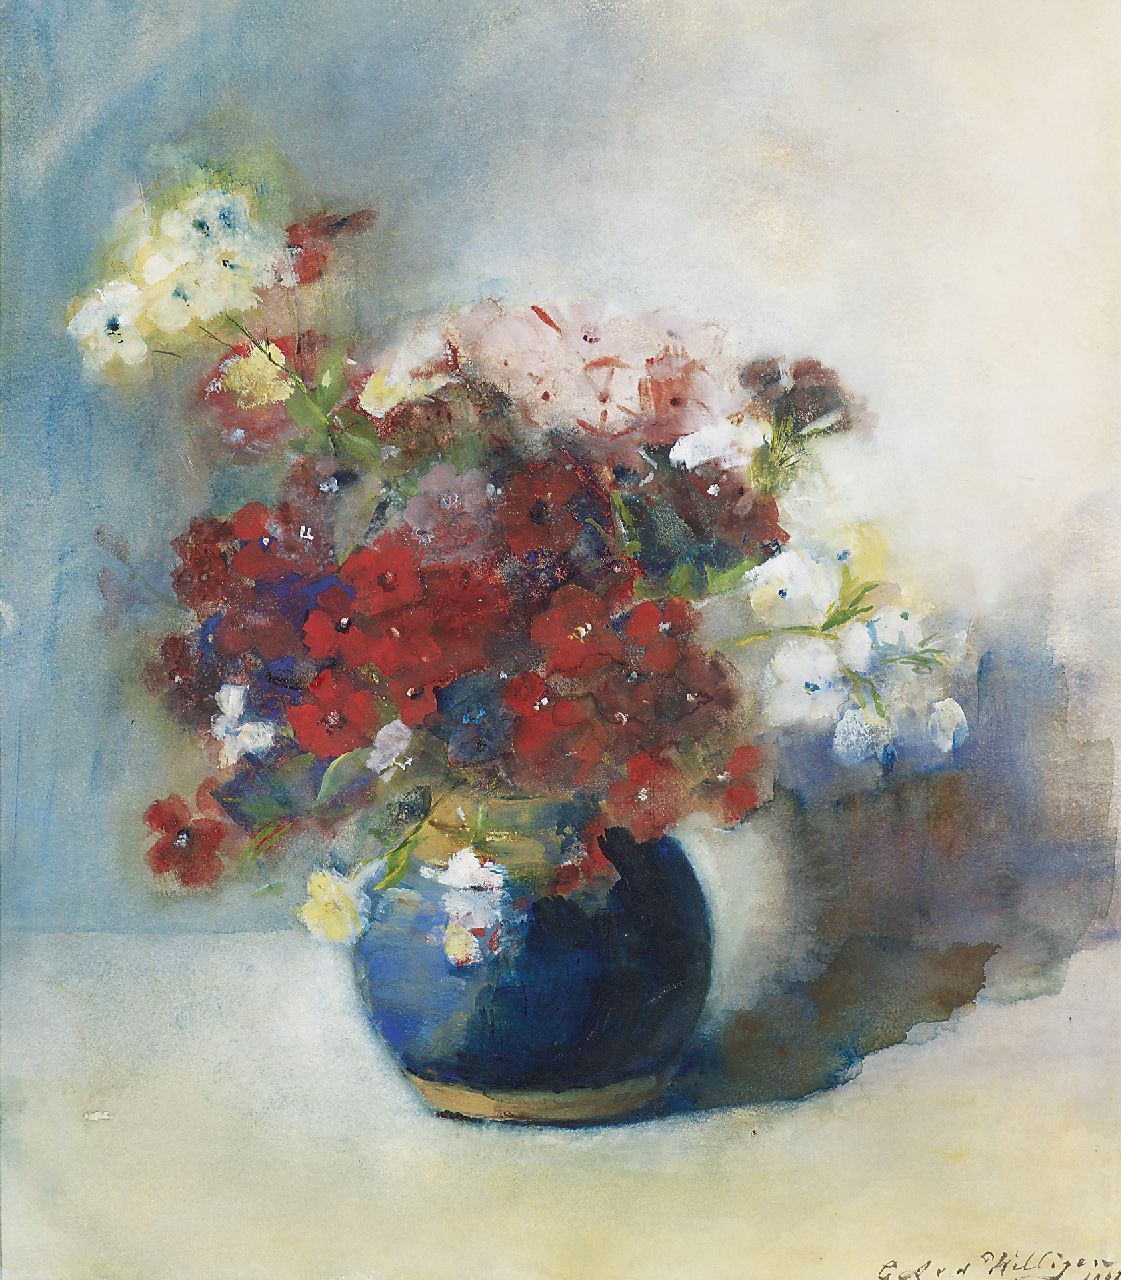 Willigen C.A. van der | Christina Abigael 'Chrisje' van der Willigen, Flowers in blue vase, watercolour on paper 42.0 x 37.5 cm, signed l.r. and dated 1902